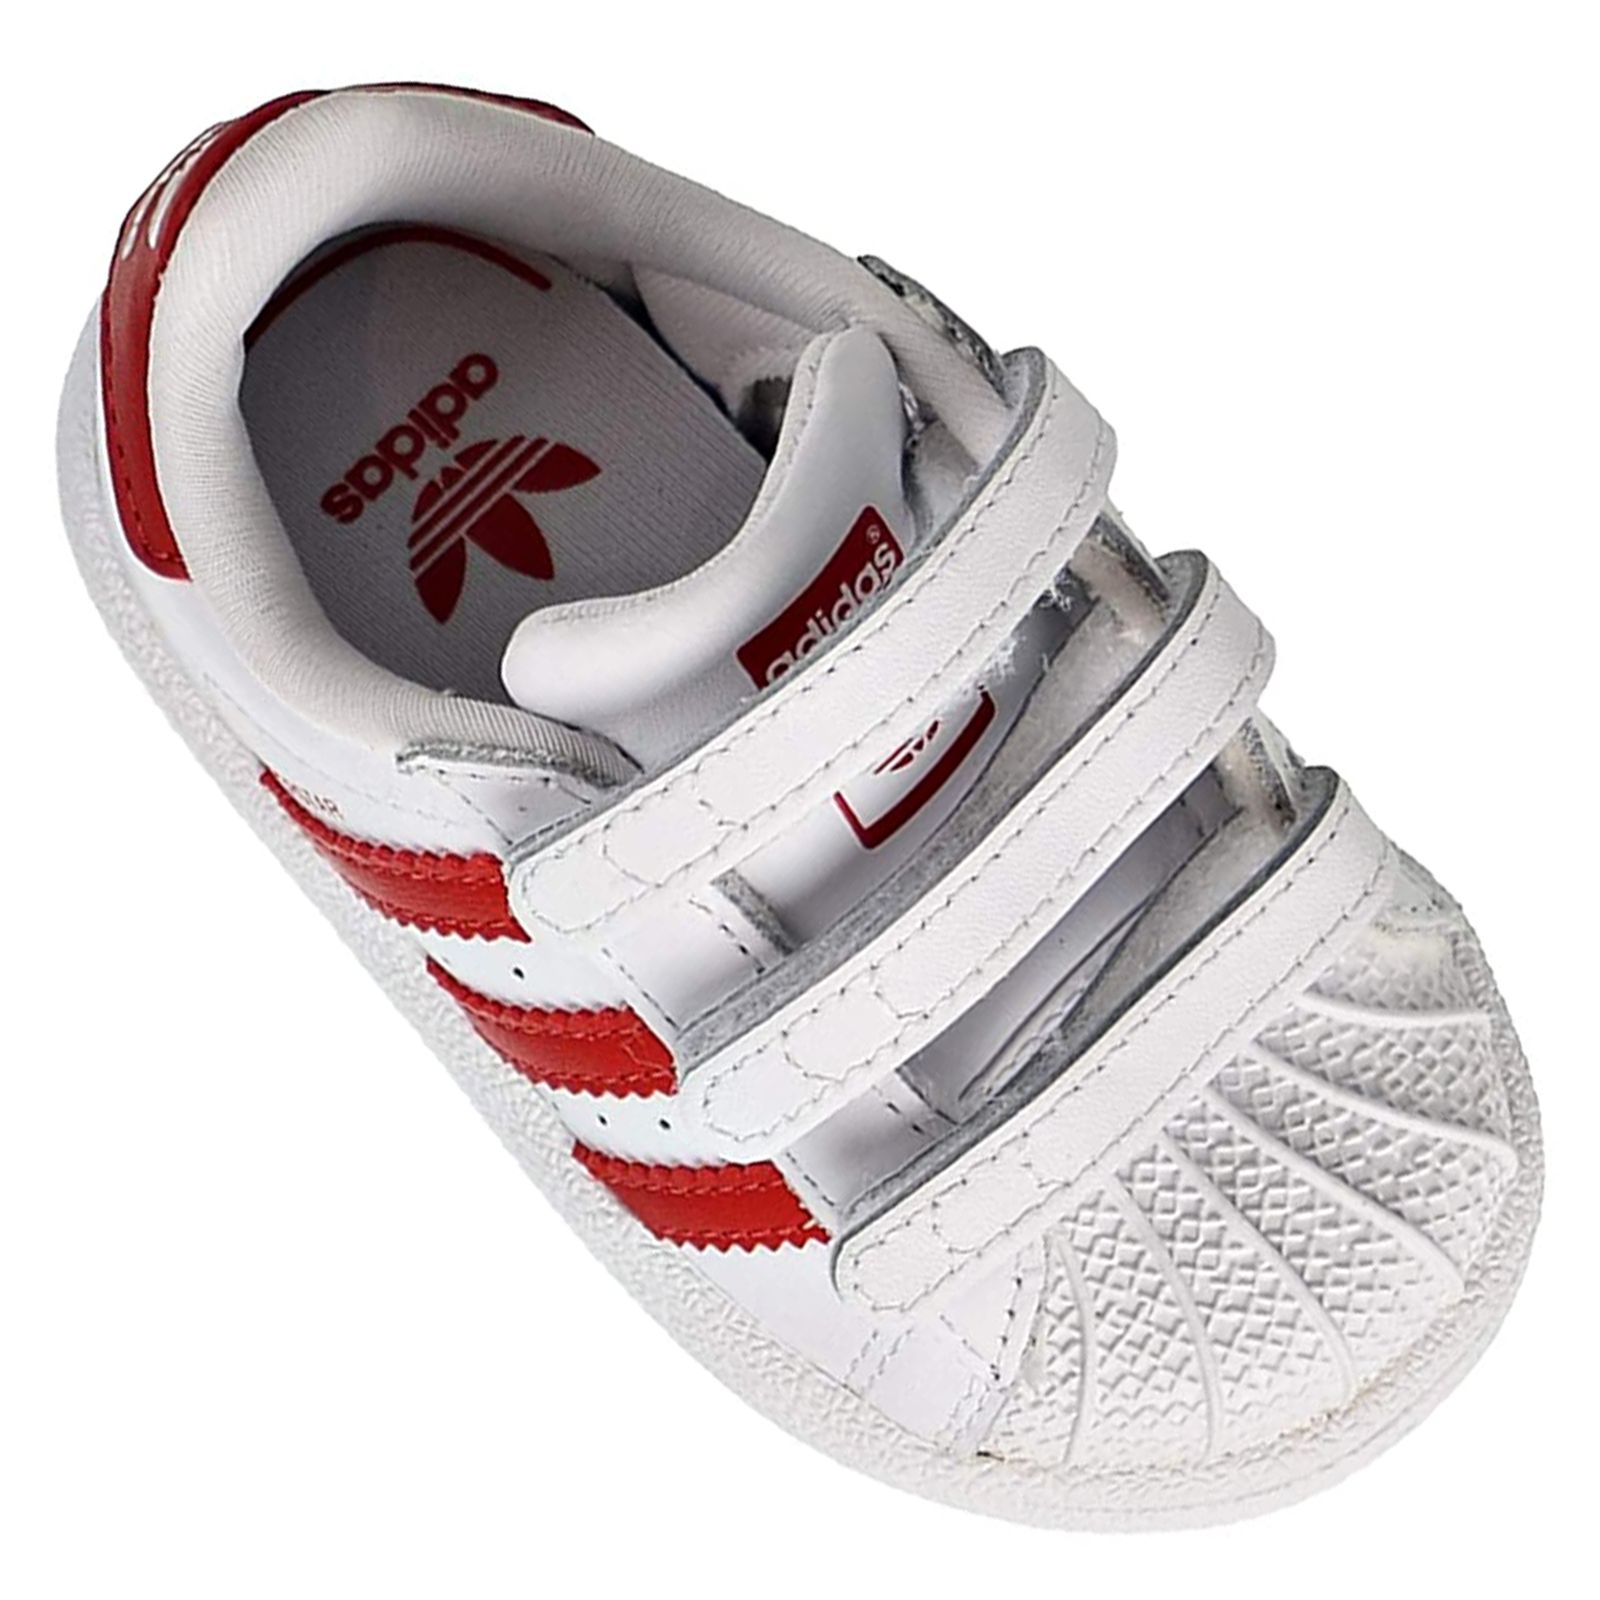 22 DURCHSTARTEER Sneaker Rot Mädchen Schuhe | Jungen adidas Weiß Superstar Turnschuhe Kinder